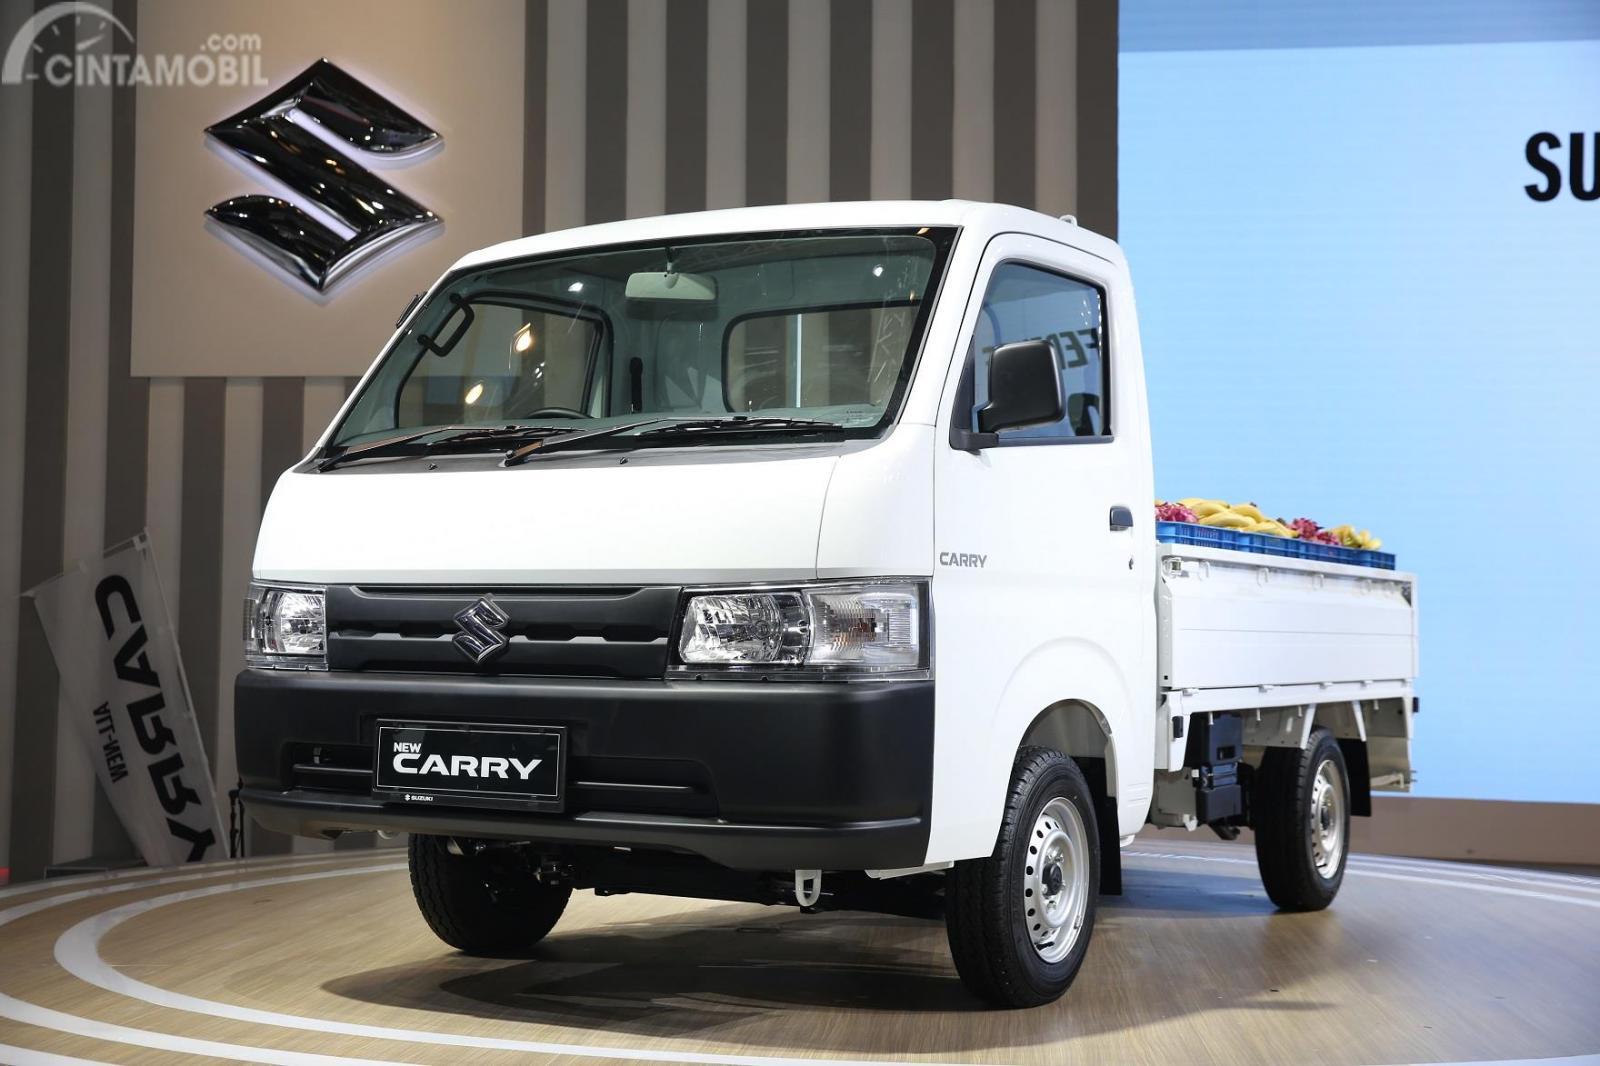 8400 Gambar Modifikasi Mobil Suzuki Carry Futura Gratis Terbaru